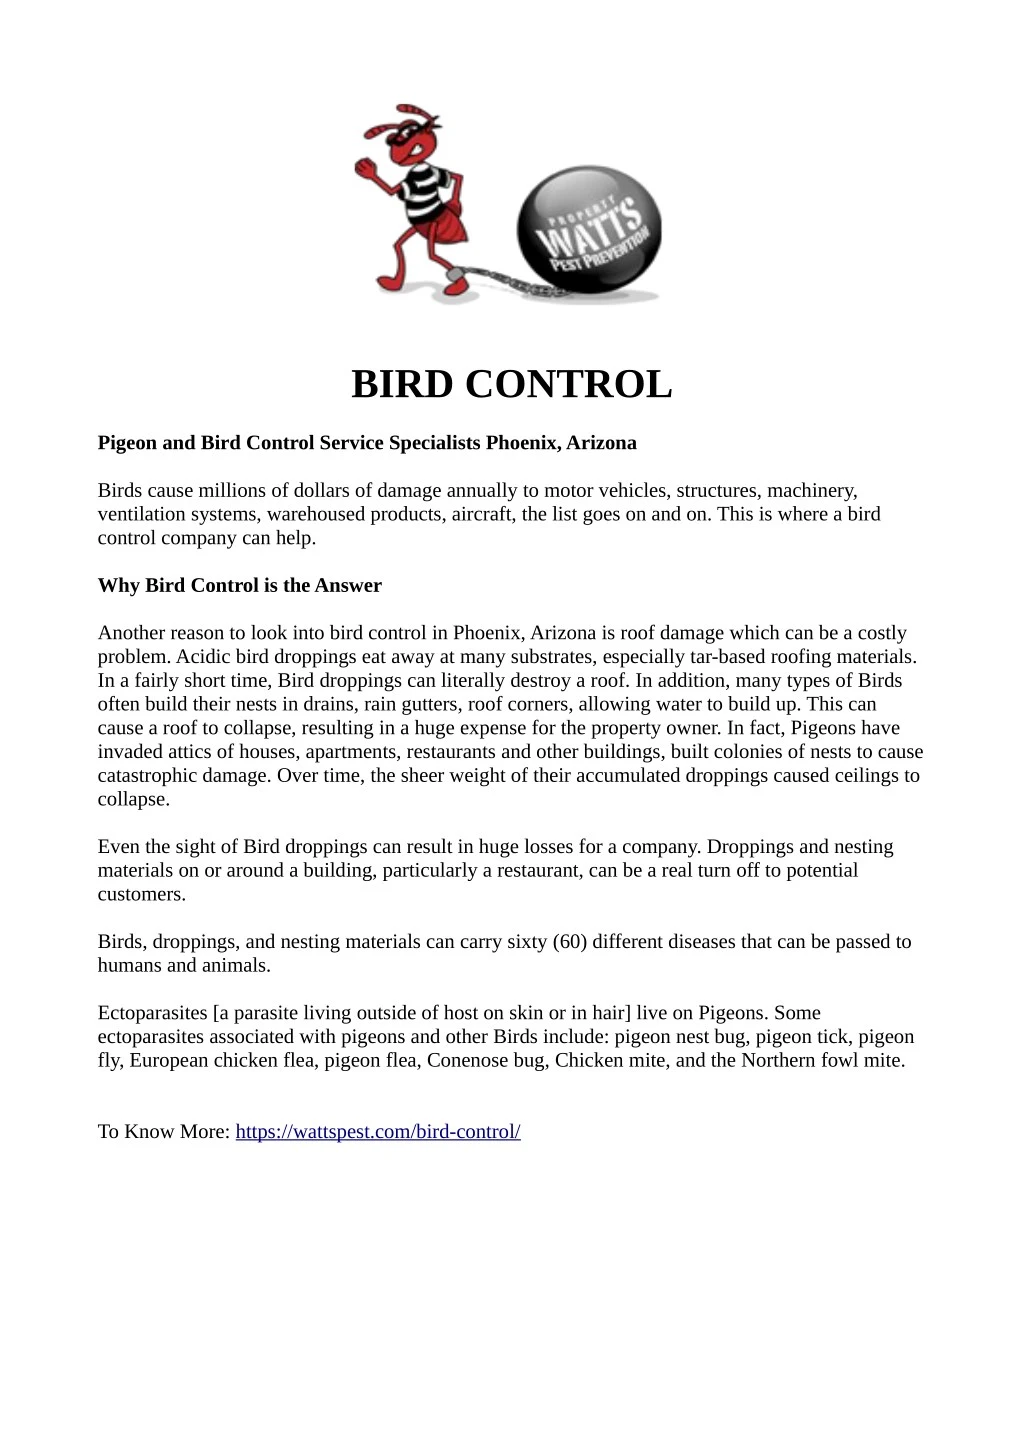 bird control